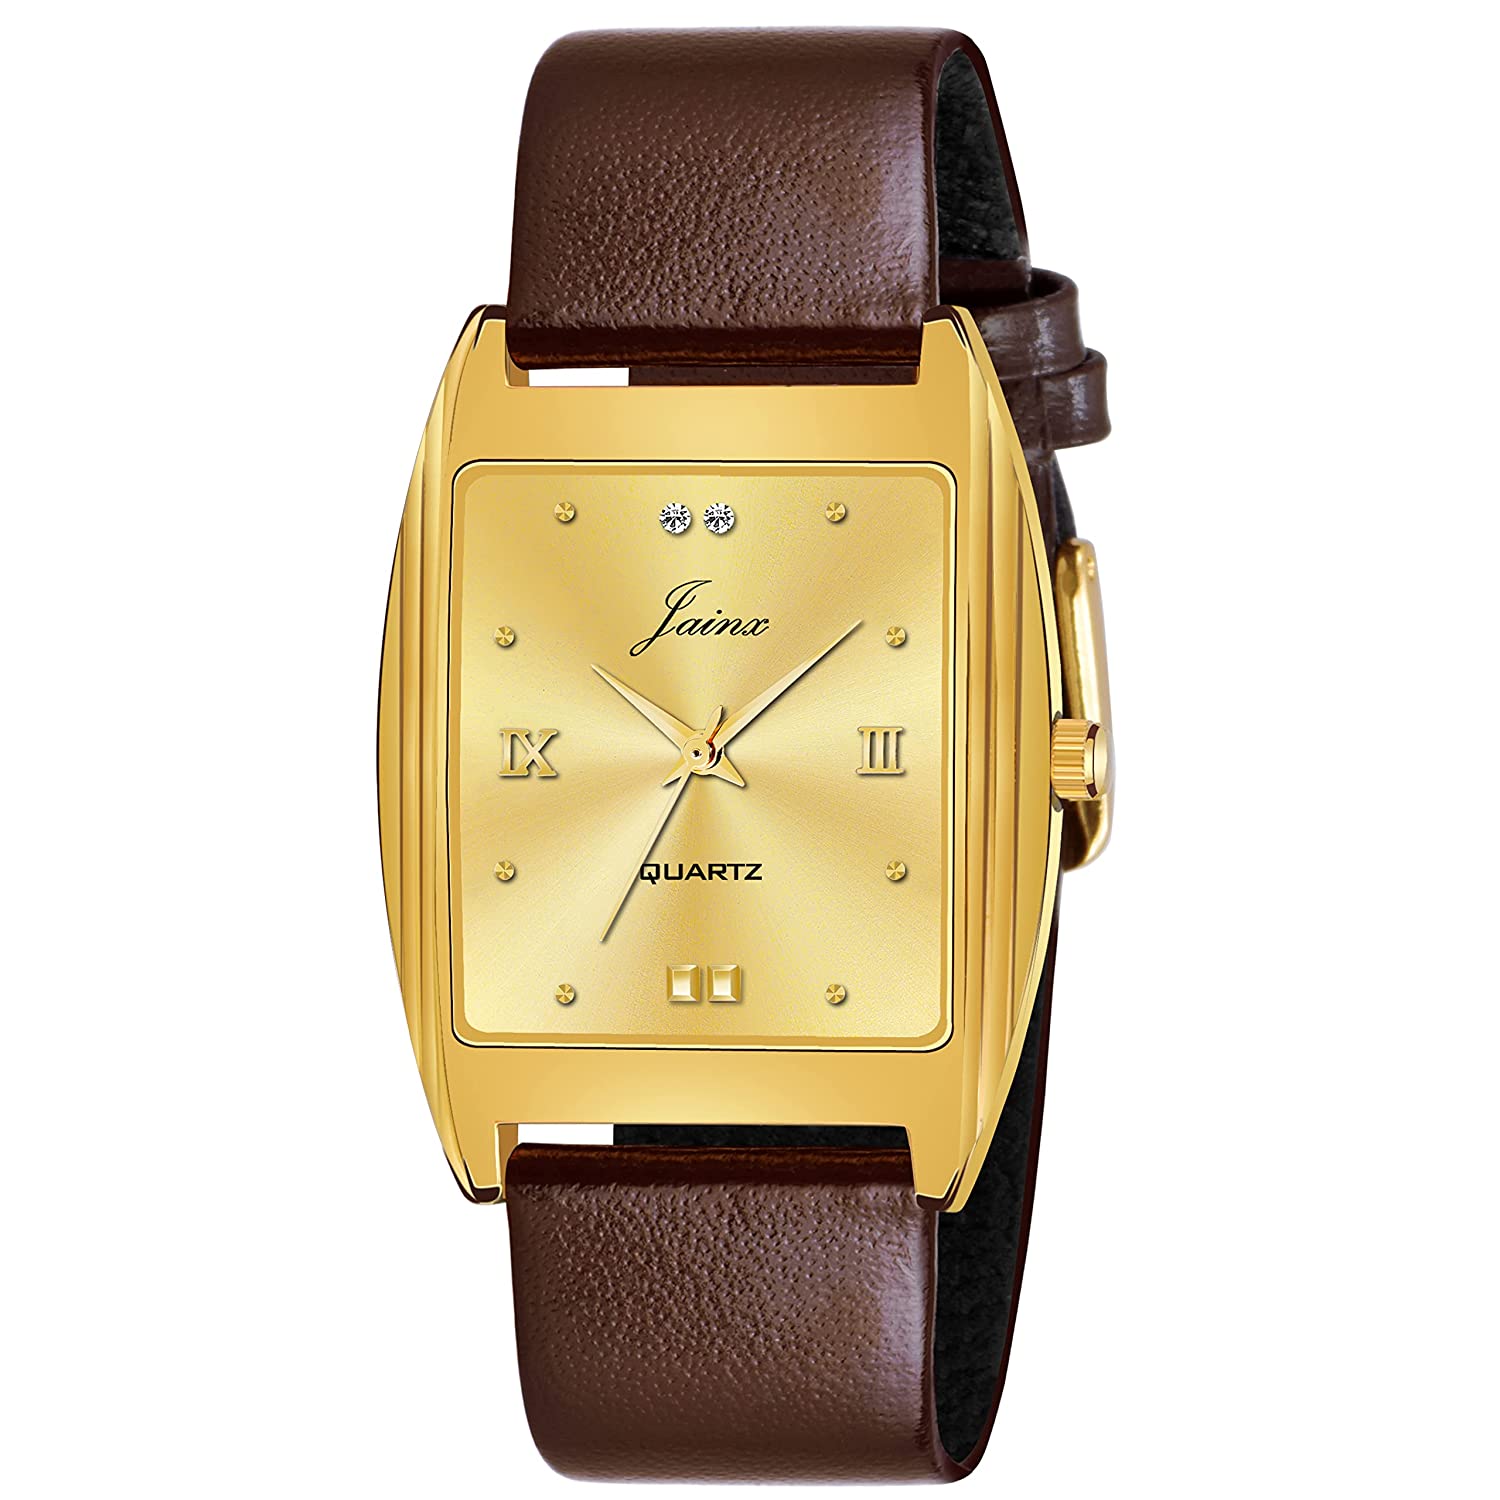 Premium Golden Dial Brown Leather Strap Analog Watch - For Men JM1170 - Jainx Store